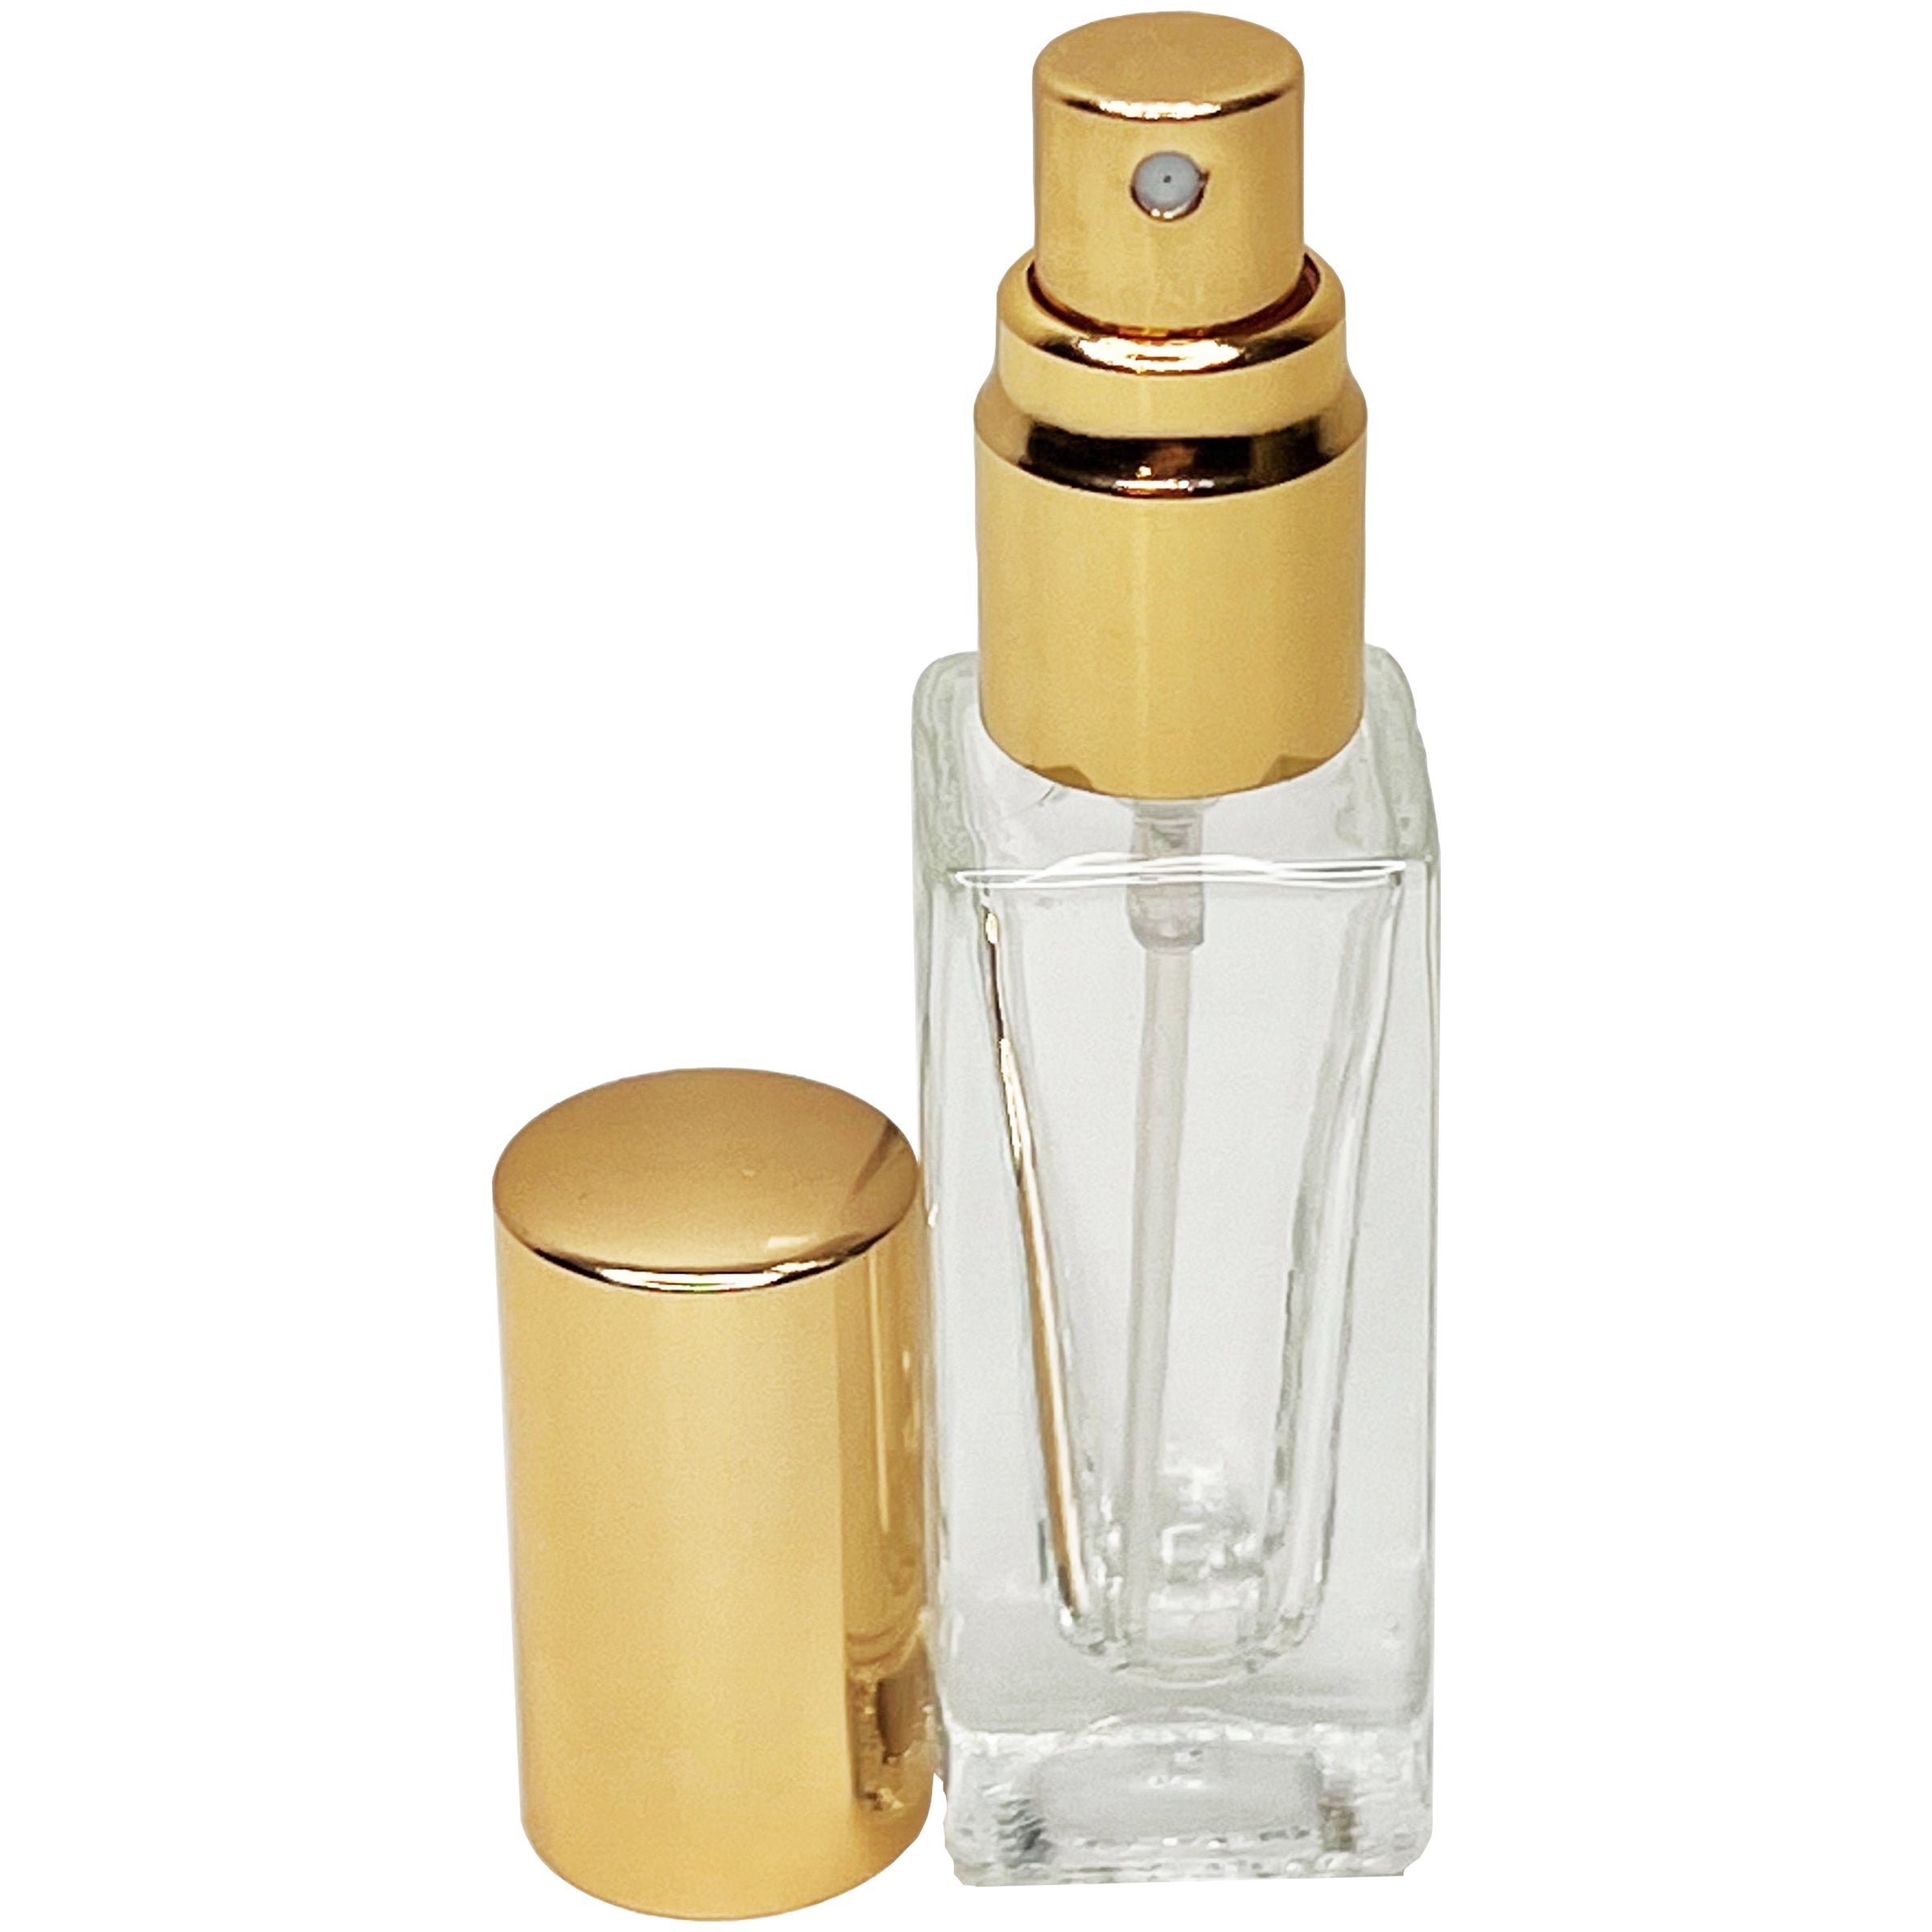 6ml .2oz Thick Glass mini perfume spray bottles 3 pack samples